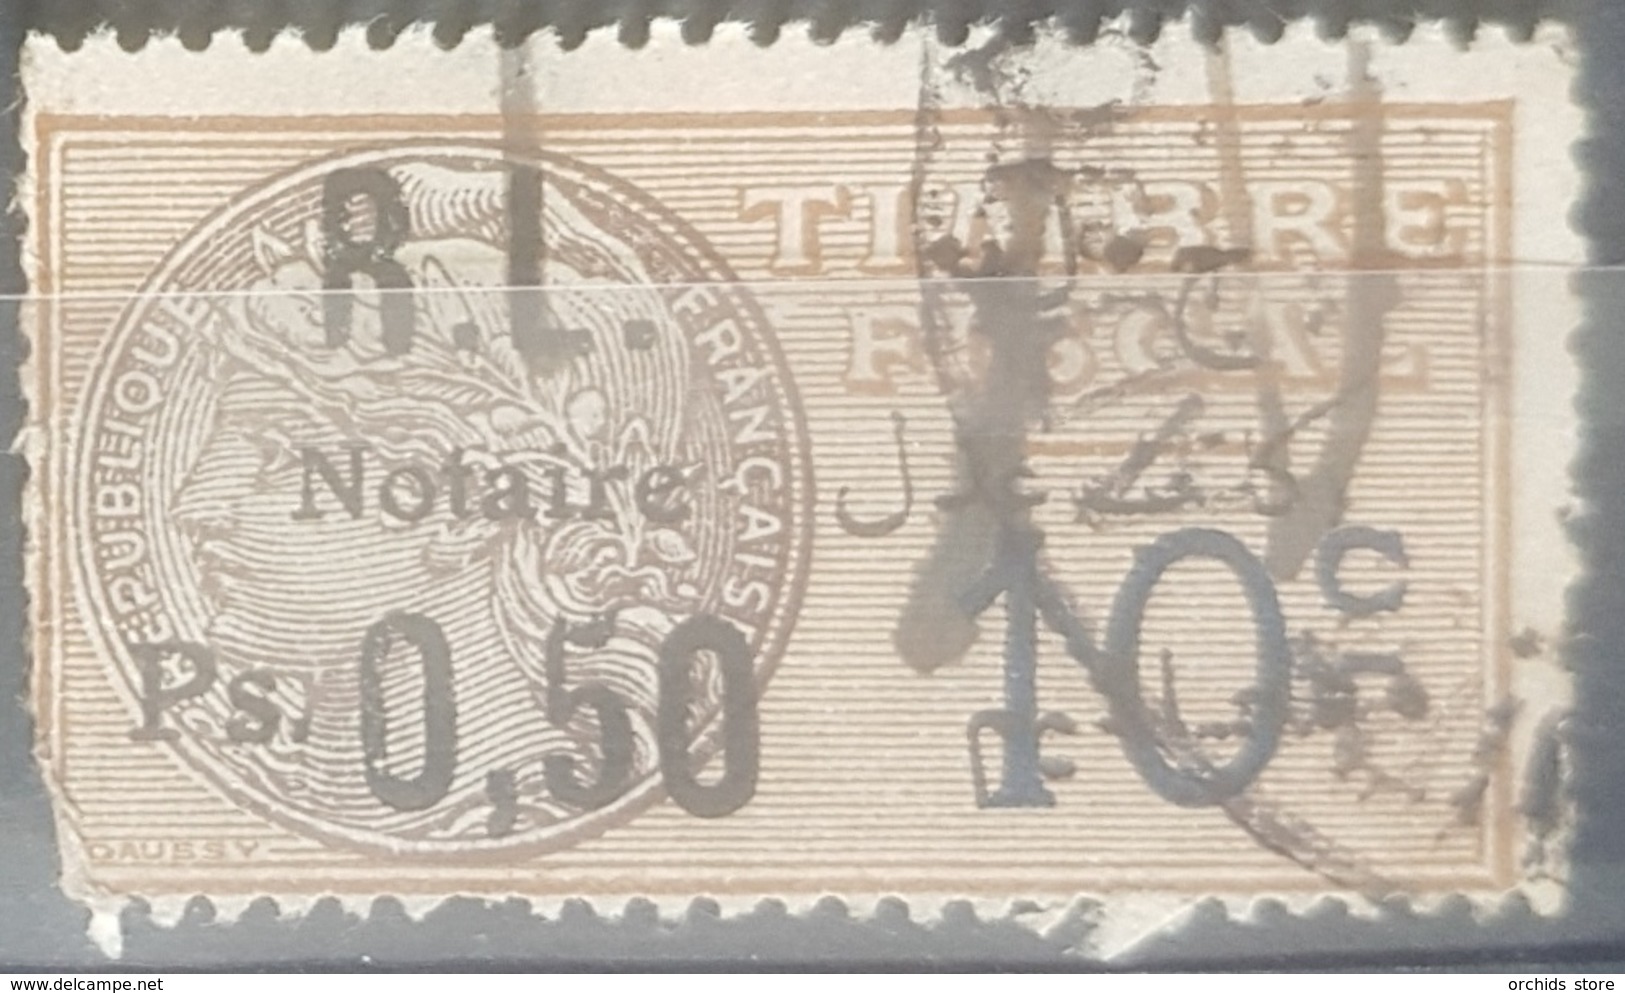 Lebanon 1926 Notarial Revenue Stamp - Overprint On France Fiscal - Liban - Lebanon